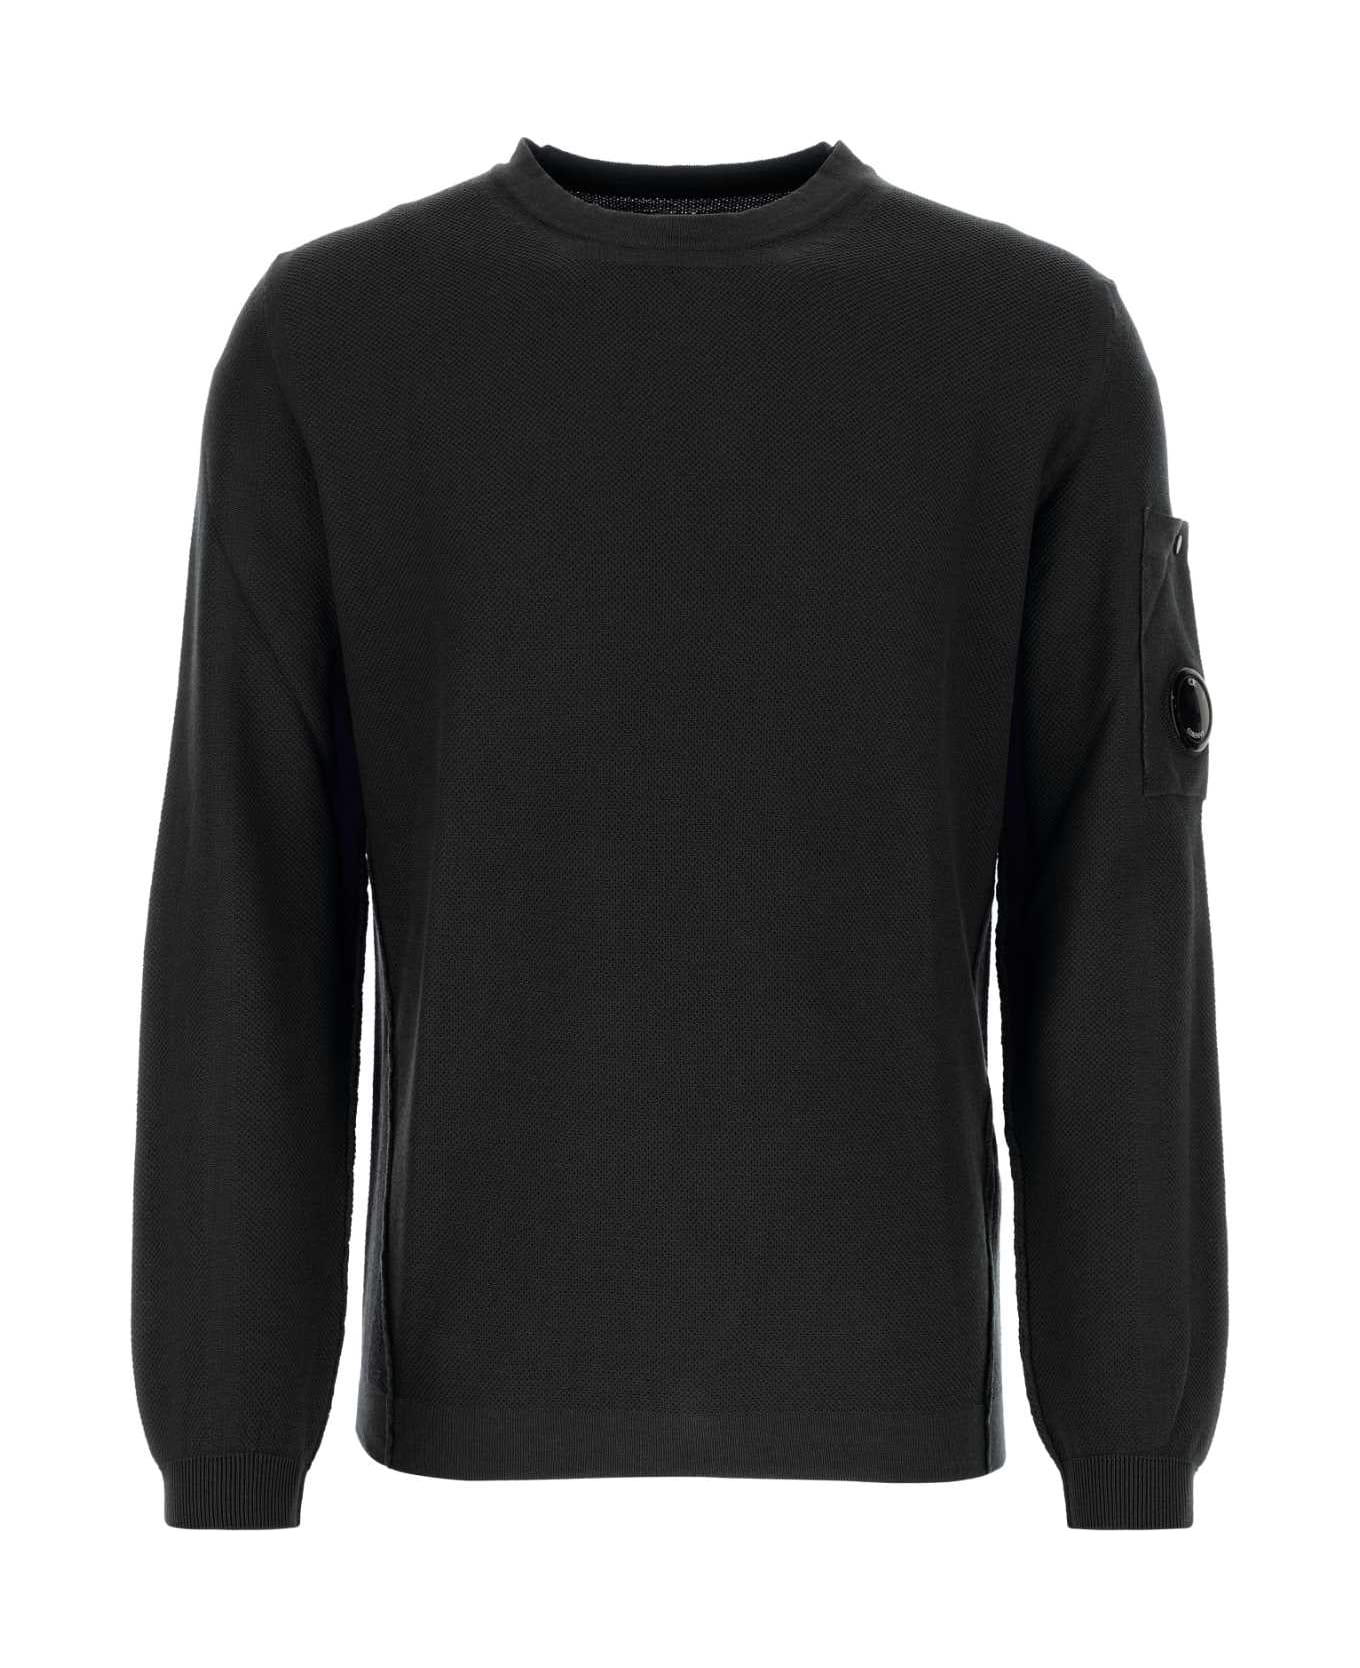 C.P. Company Black Cotton Sweater - Black